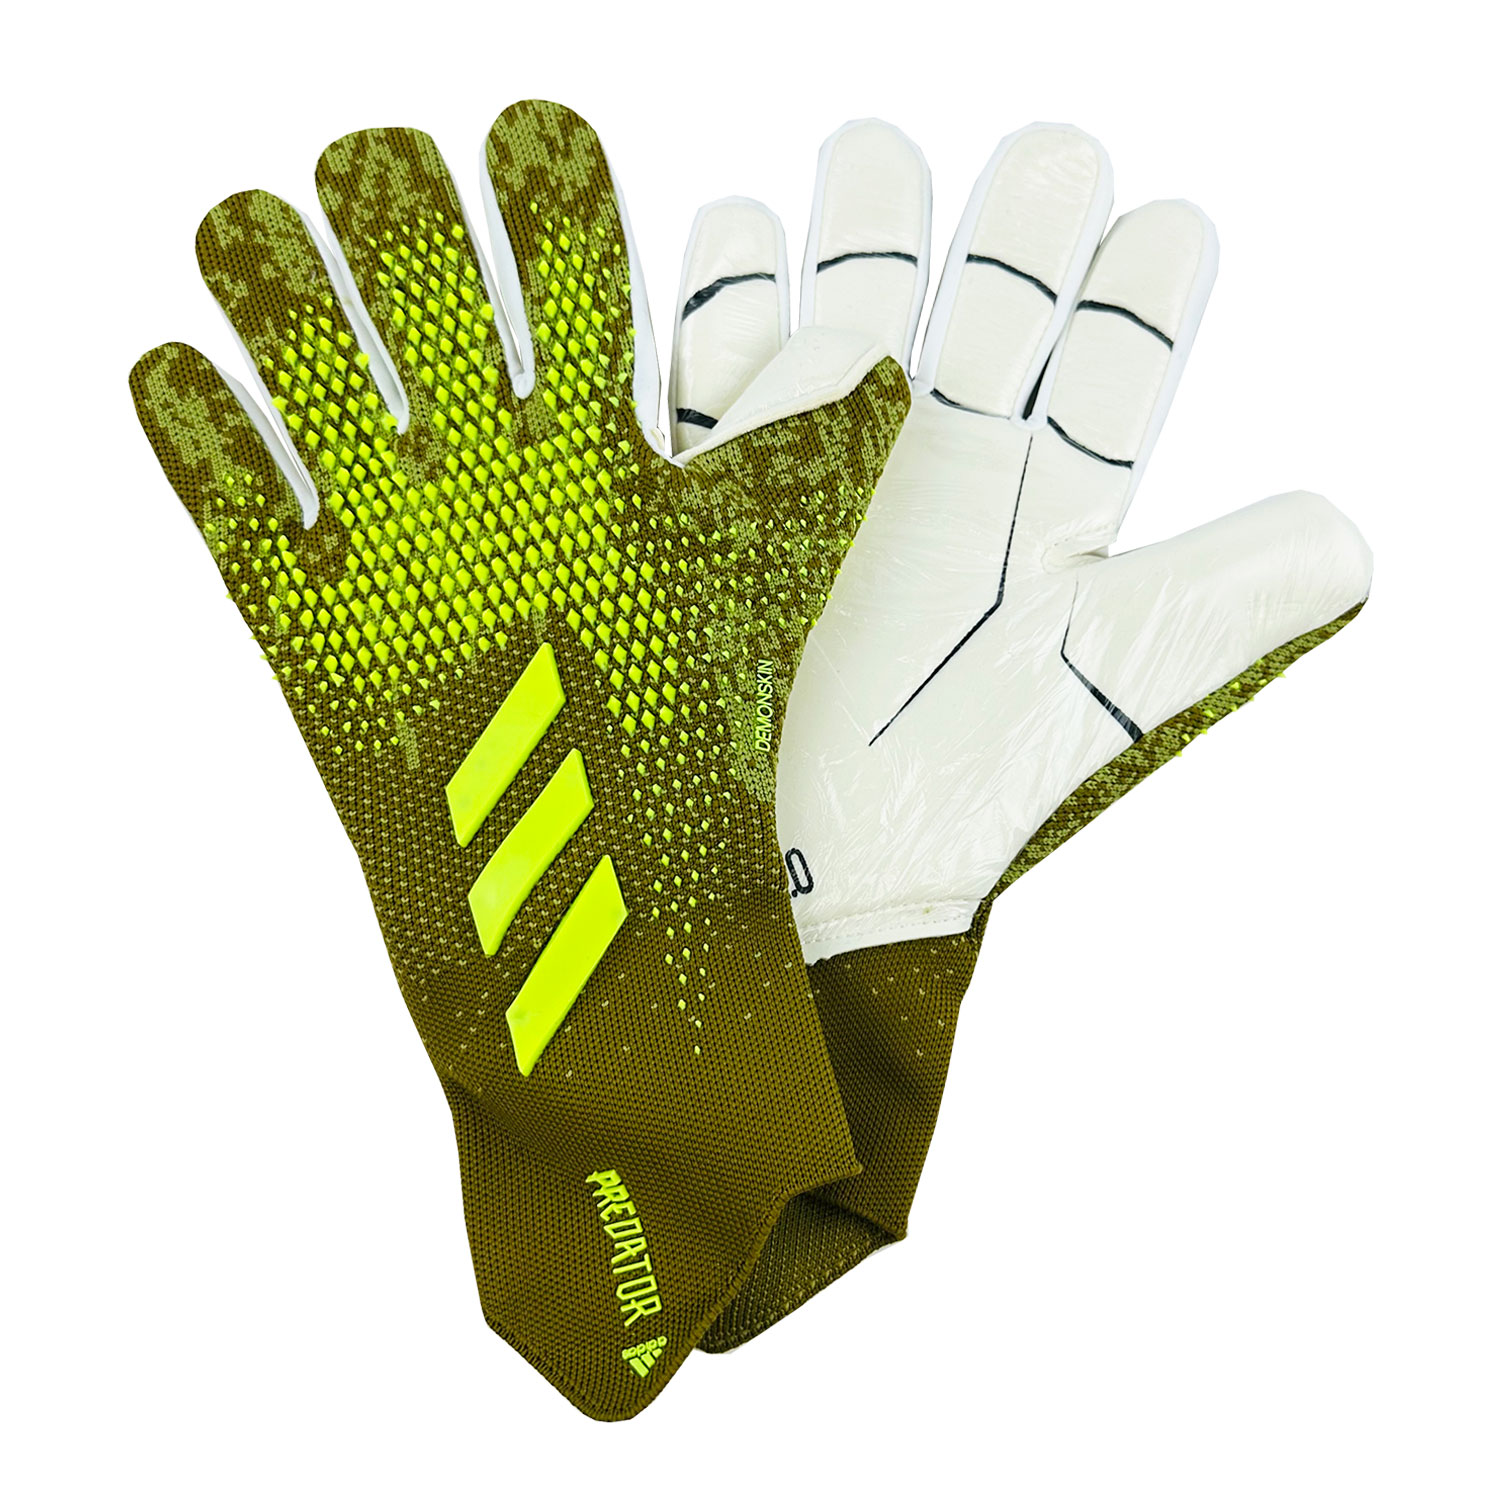 Вратарские перчатки Predator (Желто-зеленый)